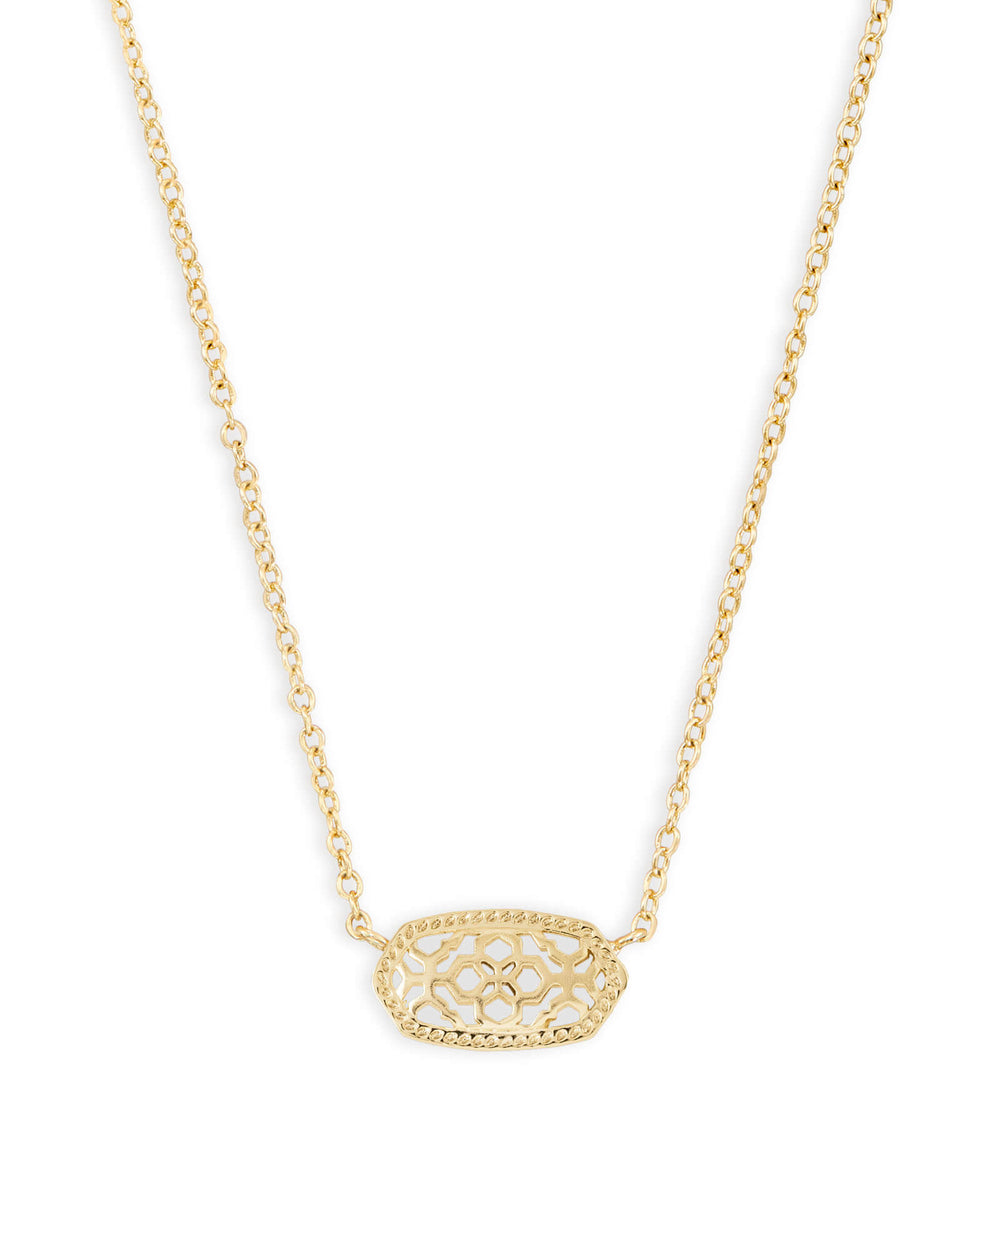 Elisa Pendant Necklace in Gold Filigree Metal